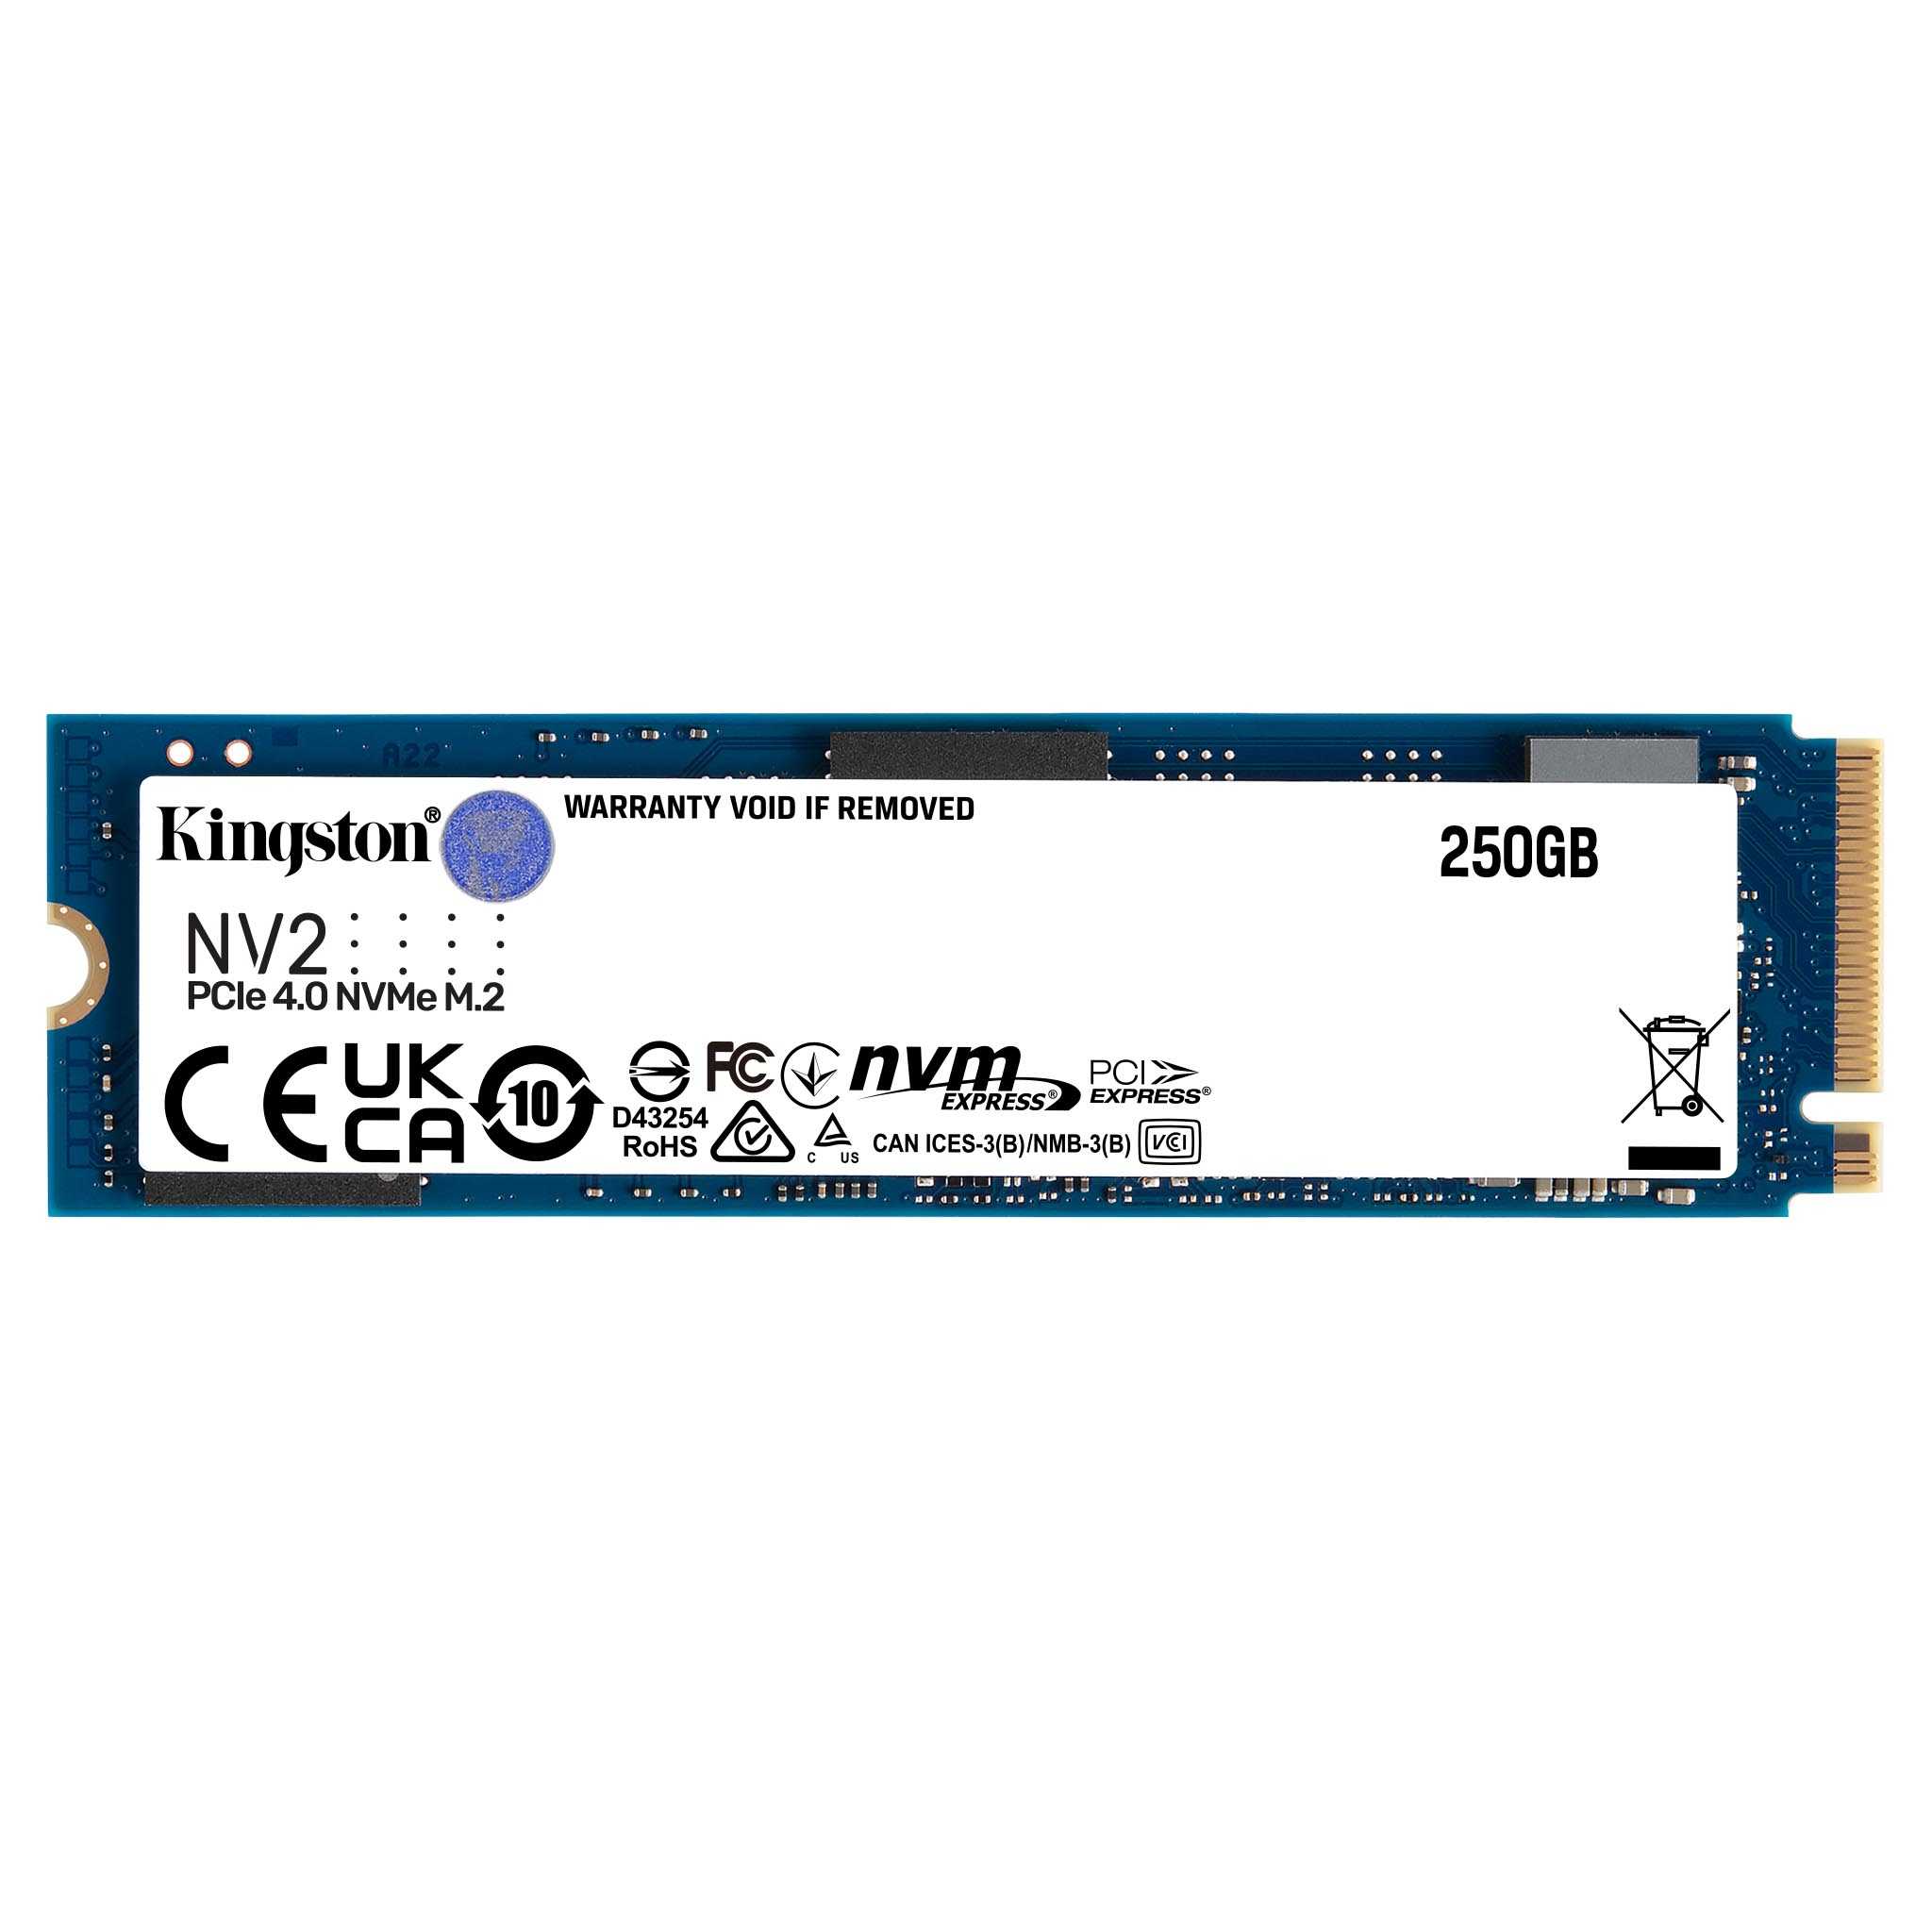 Kingston NV2 250GB  PCIe 4.0 NVMe SSD M.2